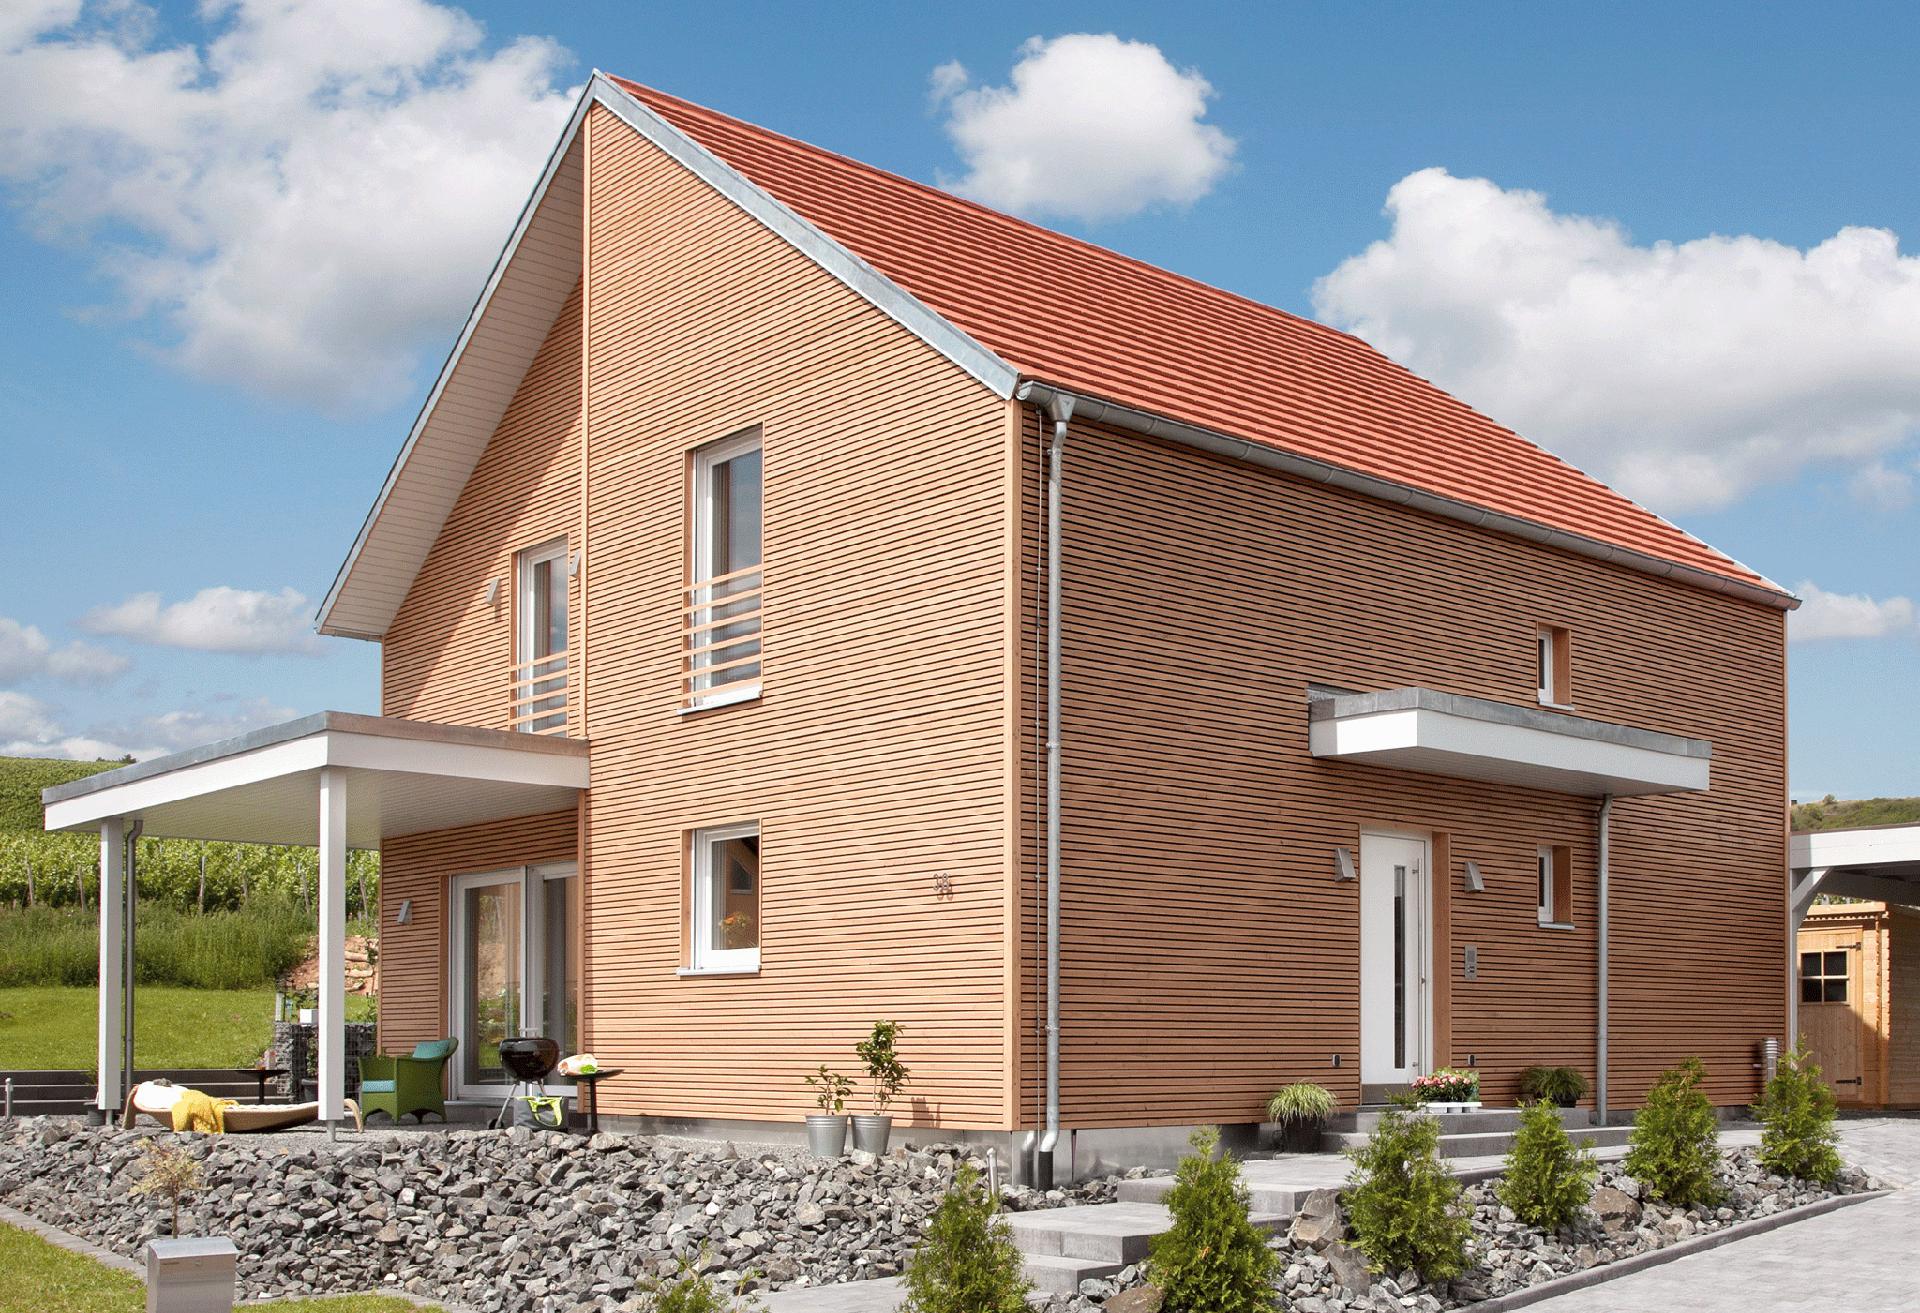 Casa unifamiliare con facciata in legno in stile Bauhaus